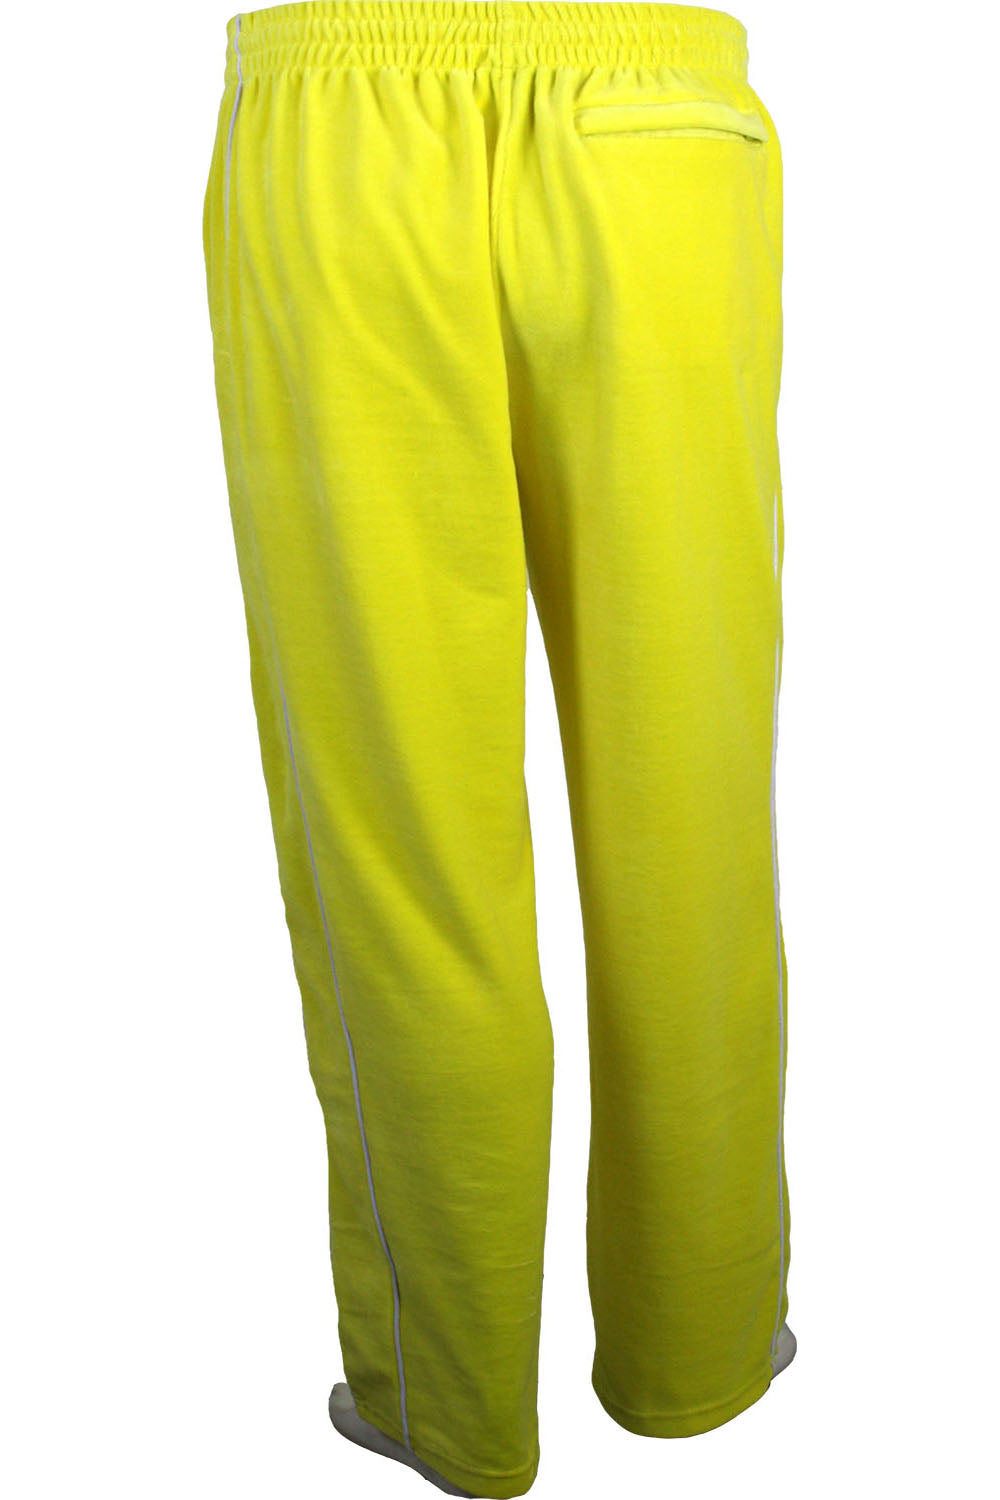 Bright neon yellow hardware deco track pants – KROST